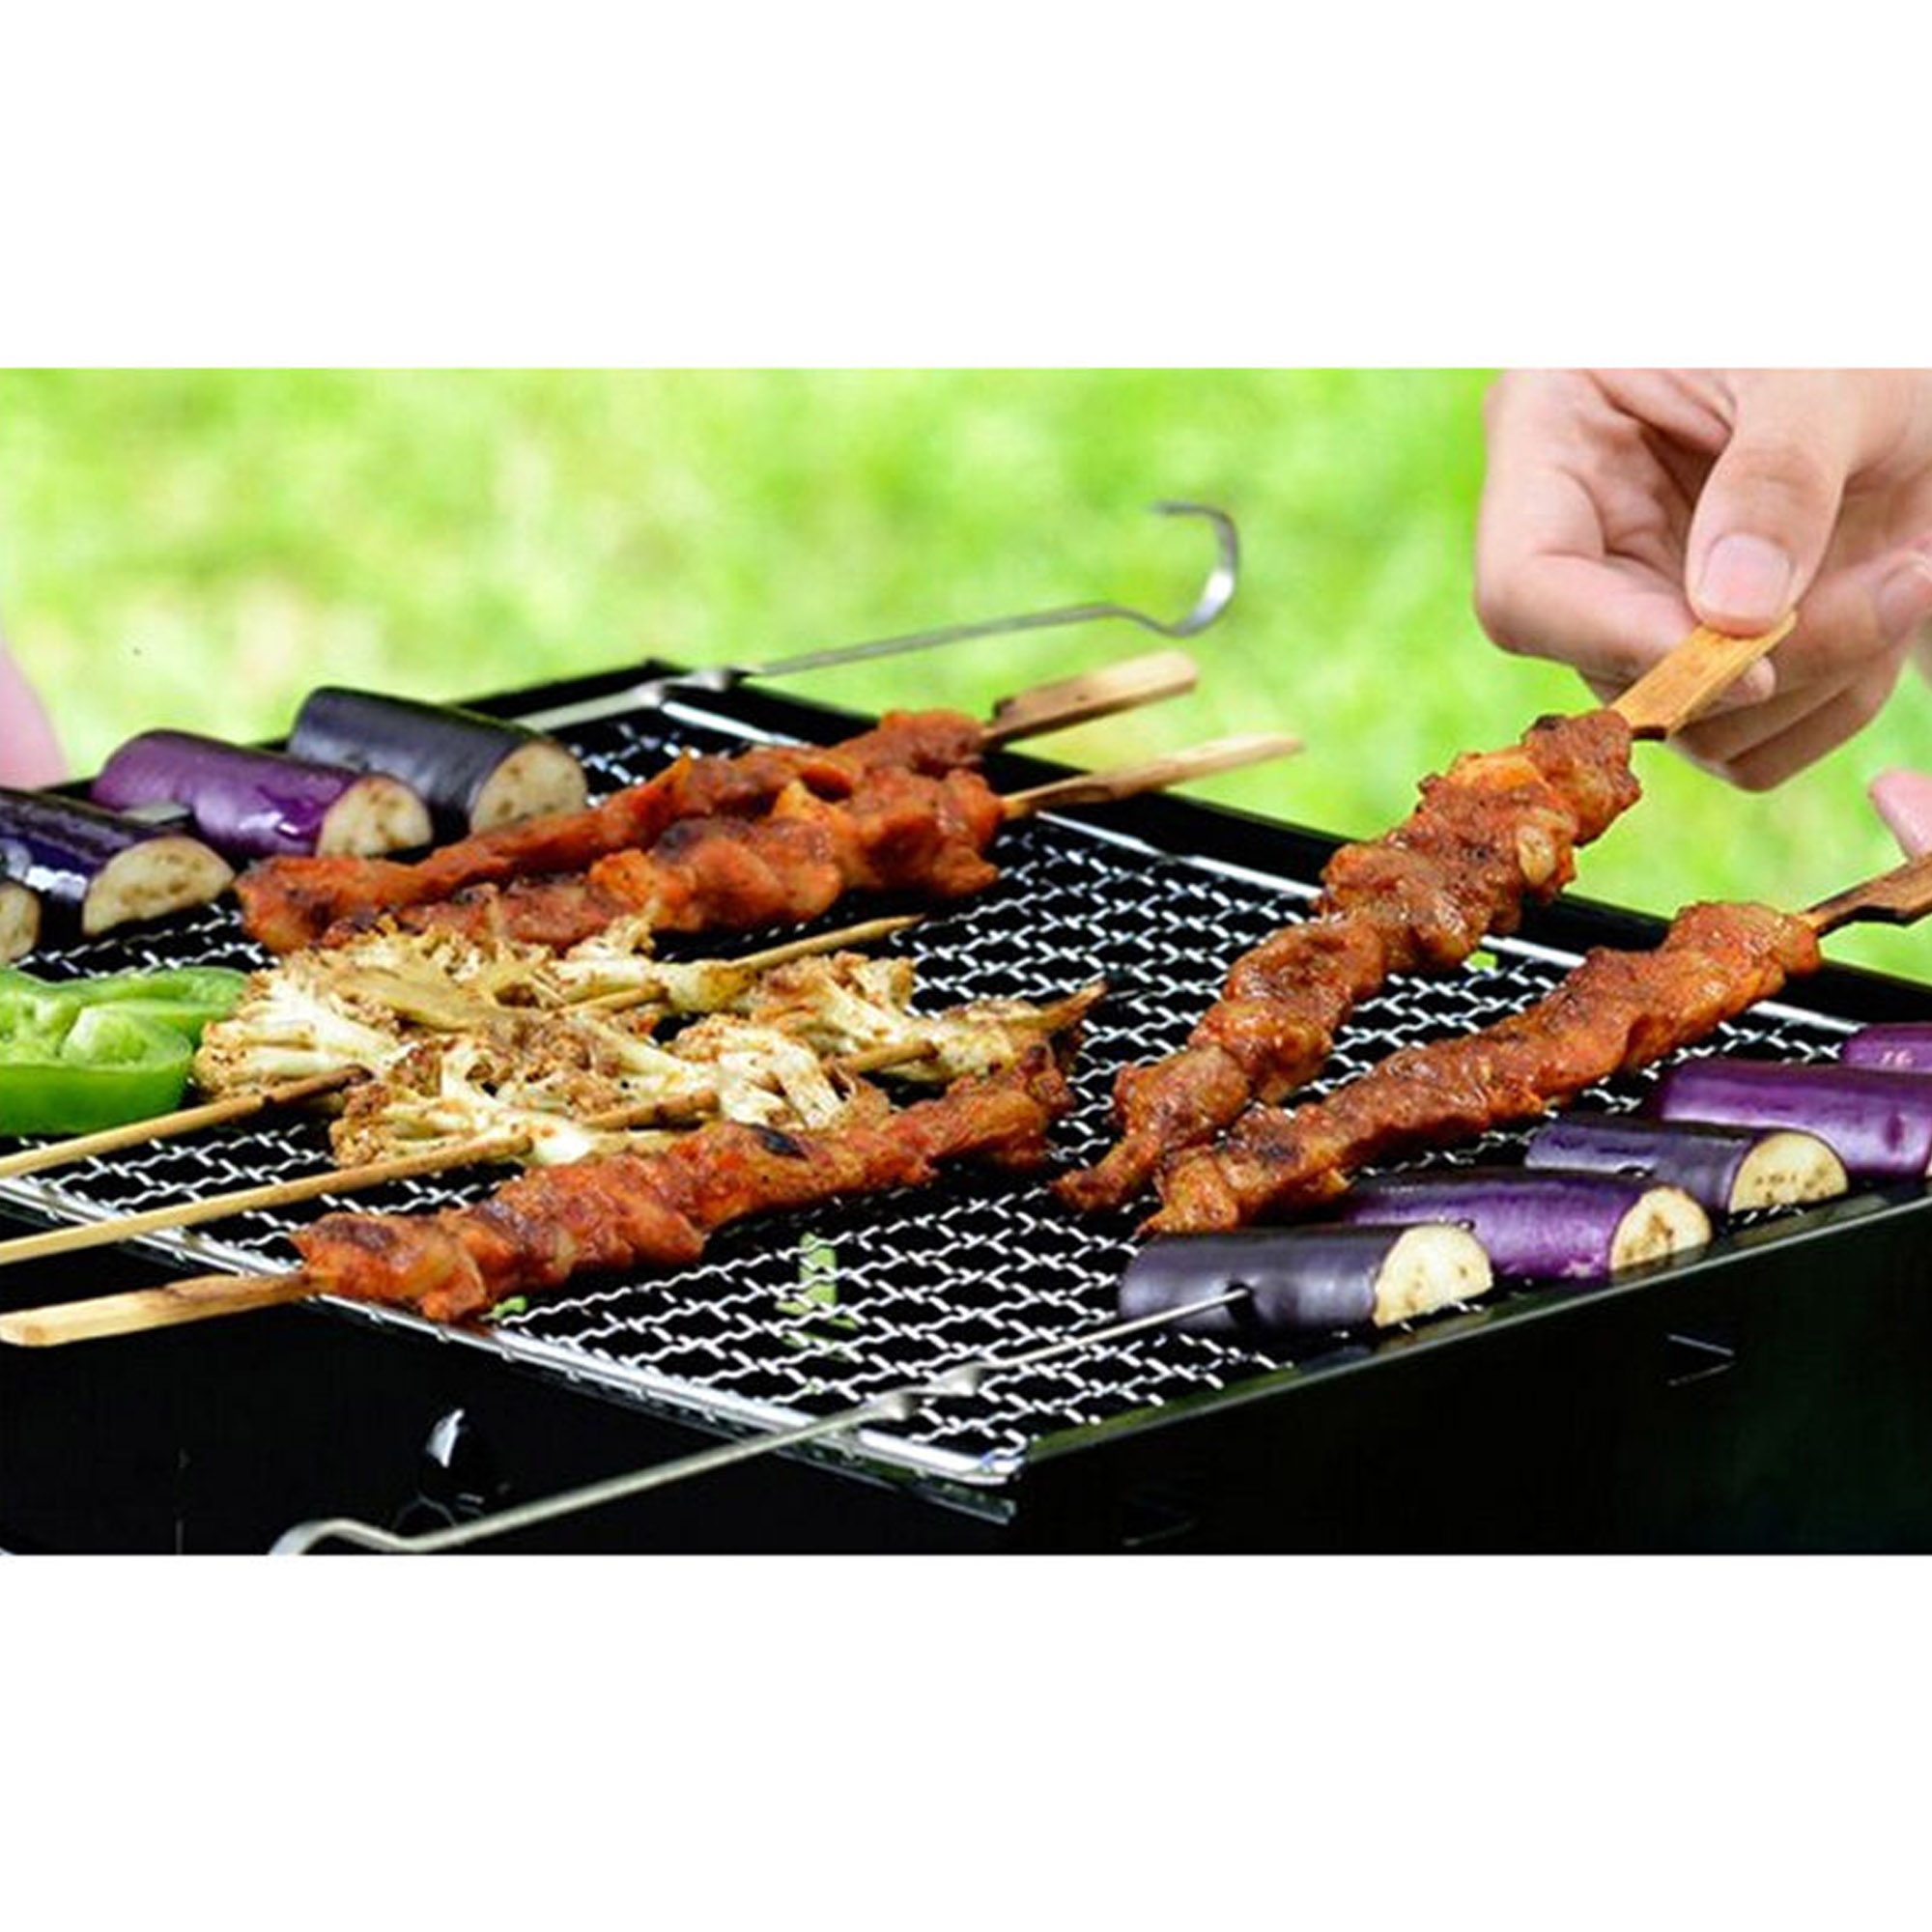 Sunisery Stainless Steel Baking Rack Barbecue Grills Racks Pan Grate Carbon Baking Net - image 4 of 6